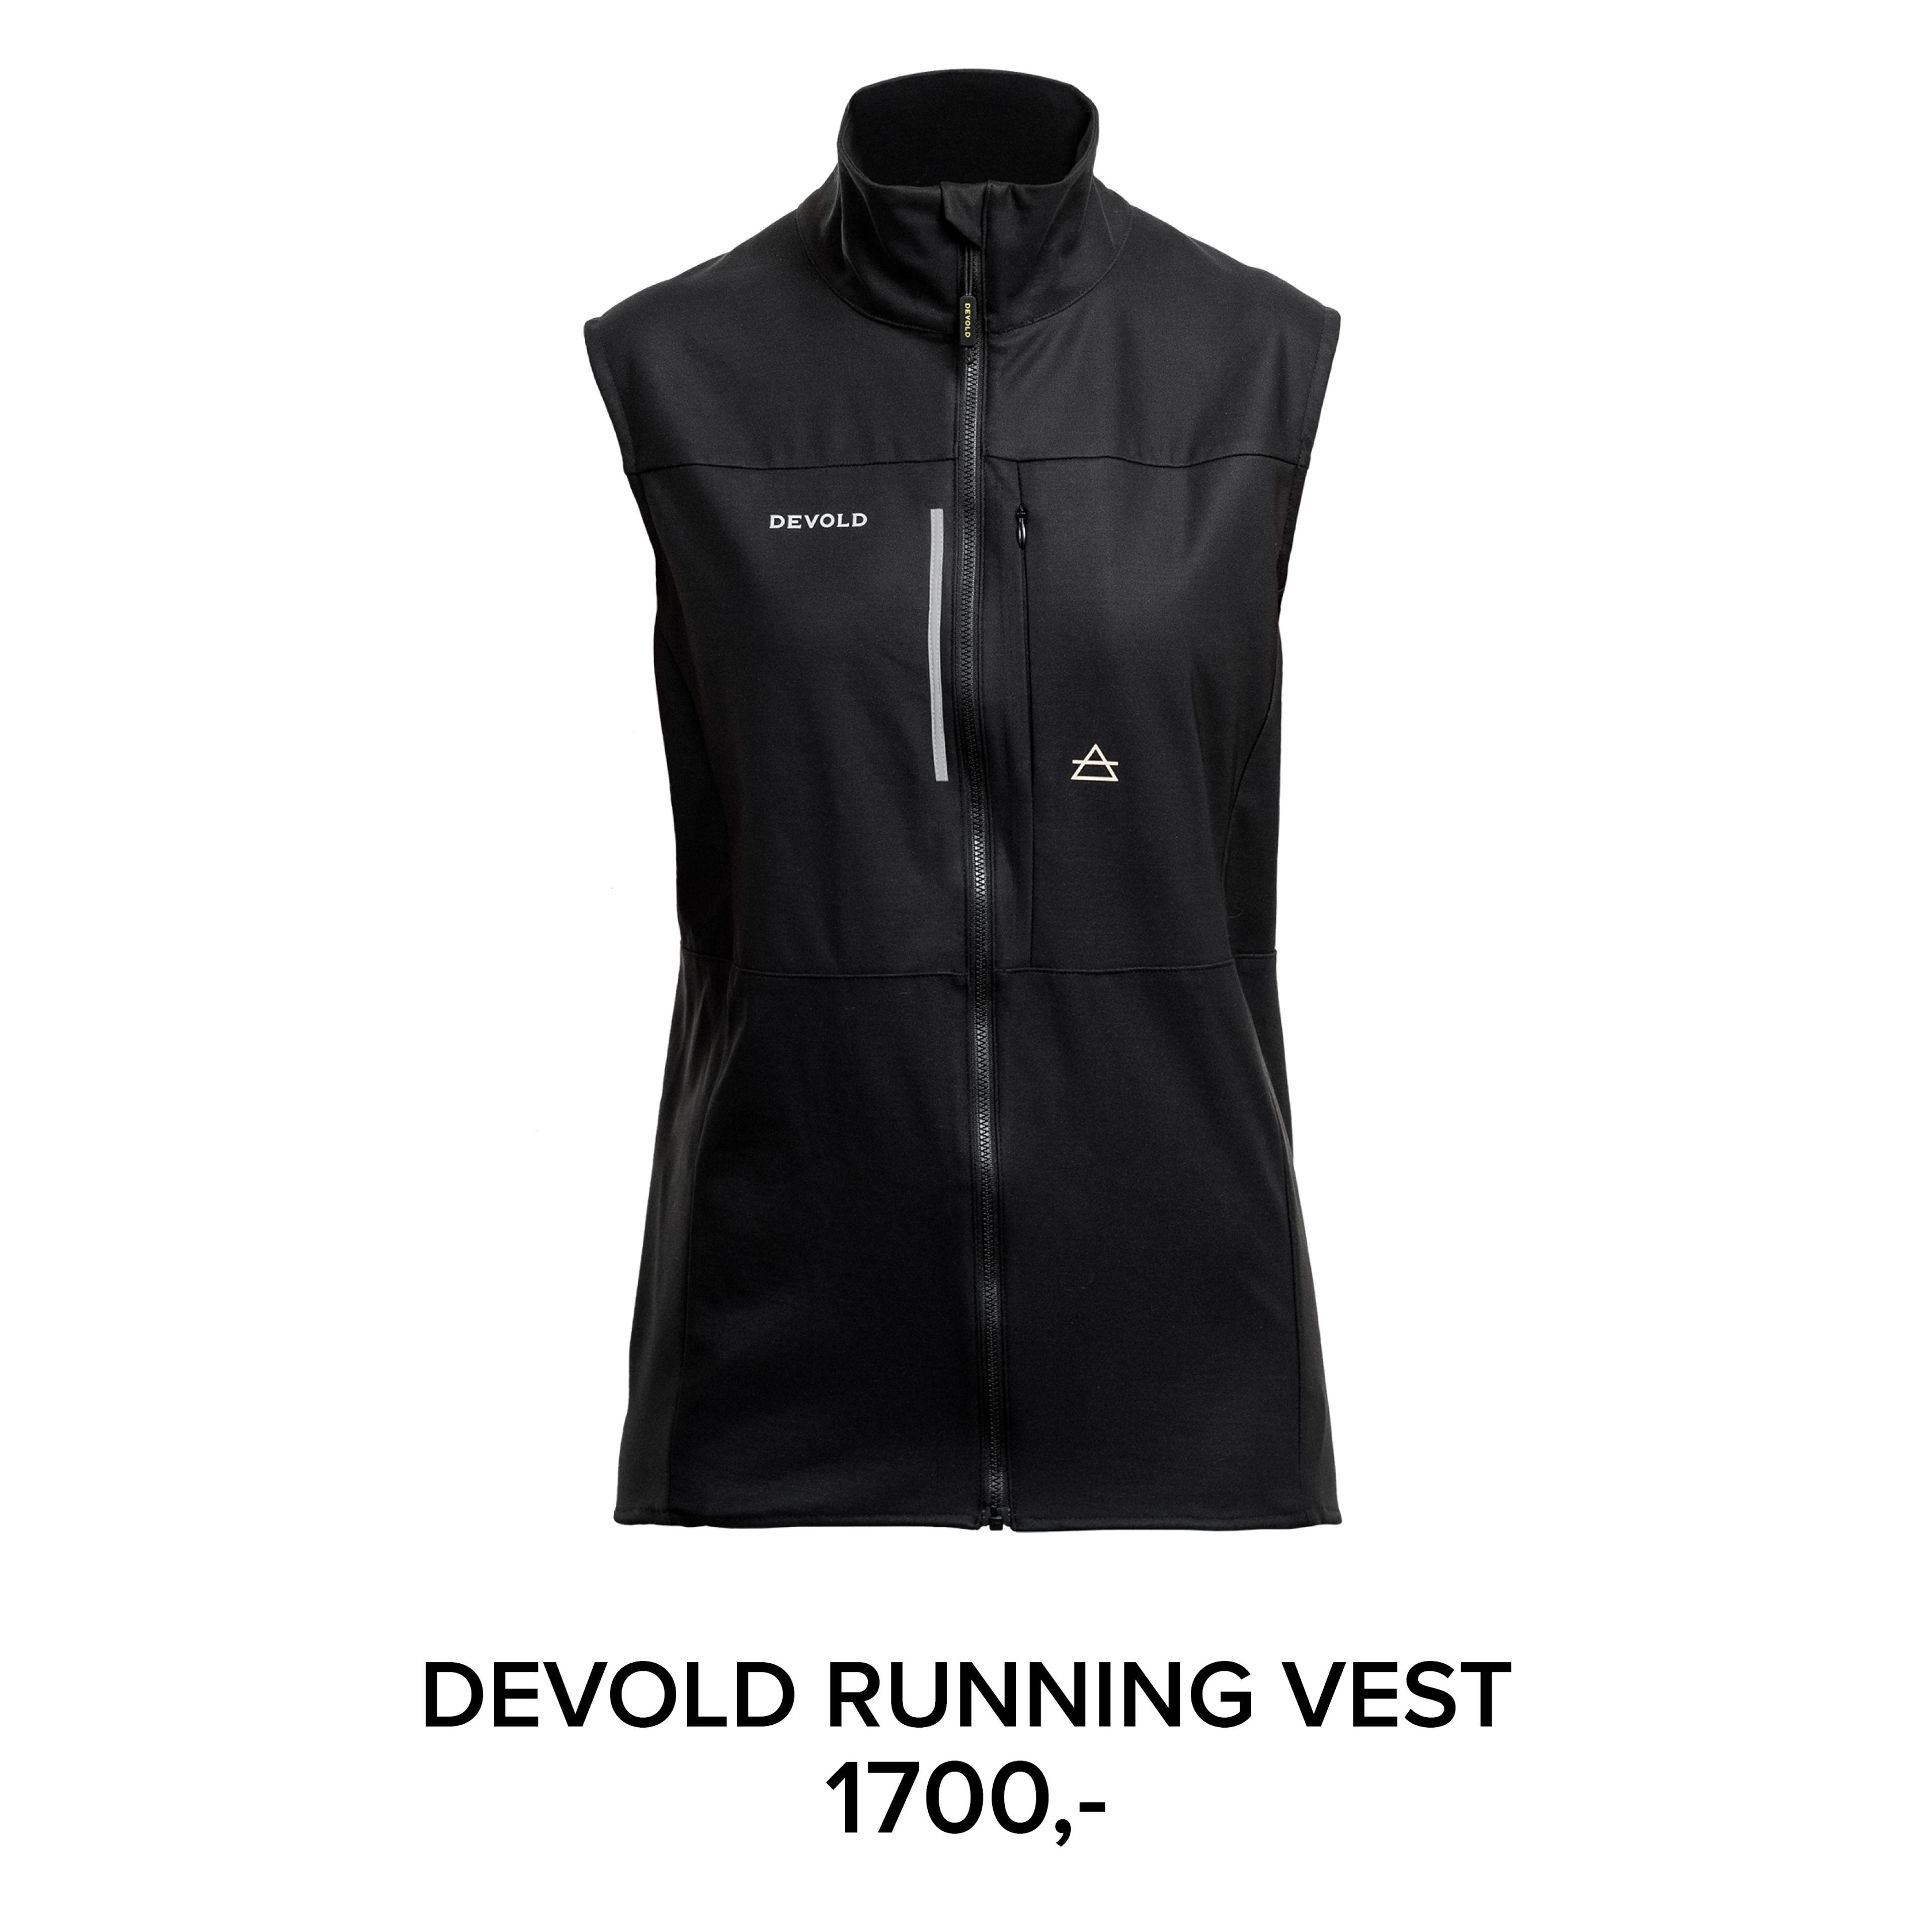 Devold running vest